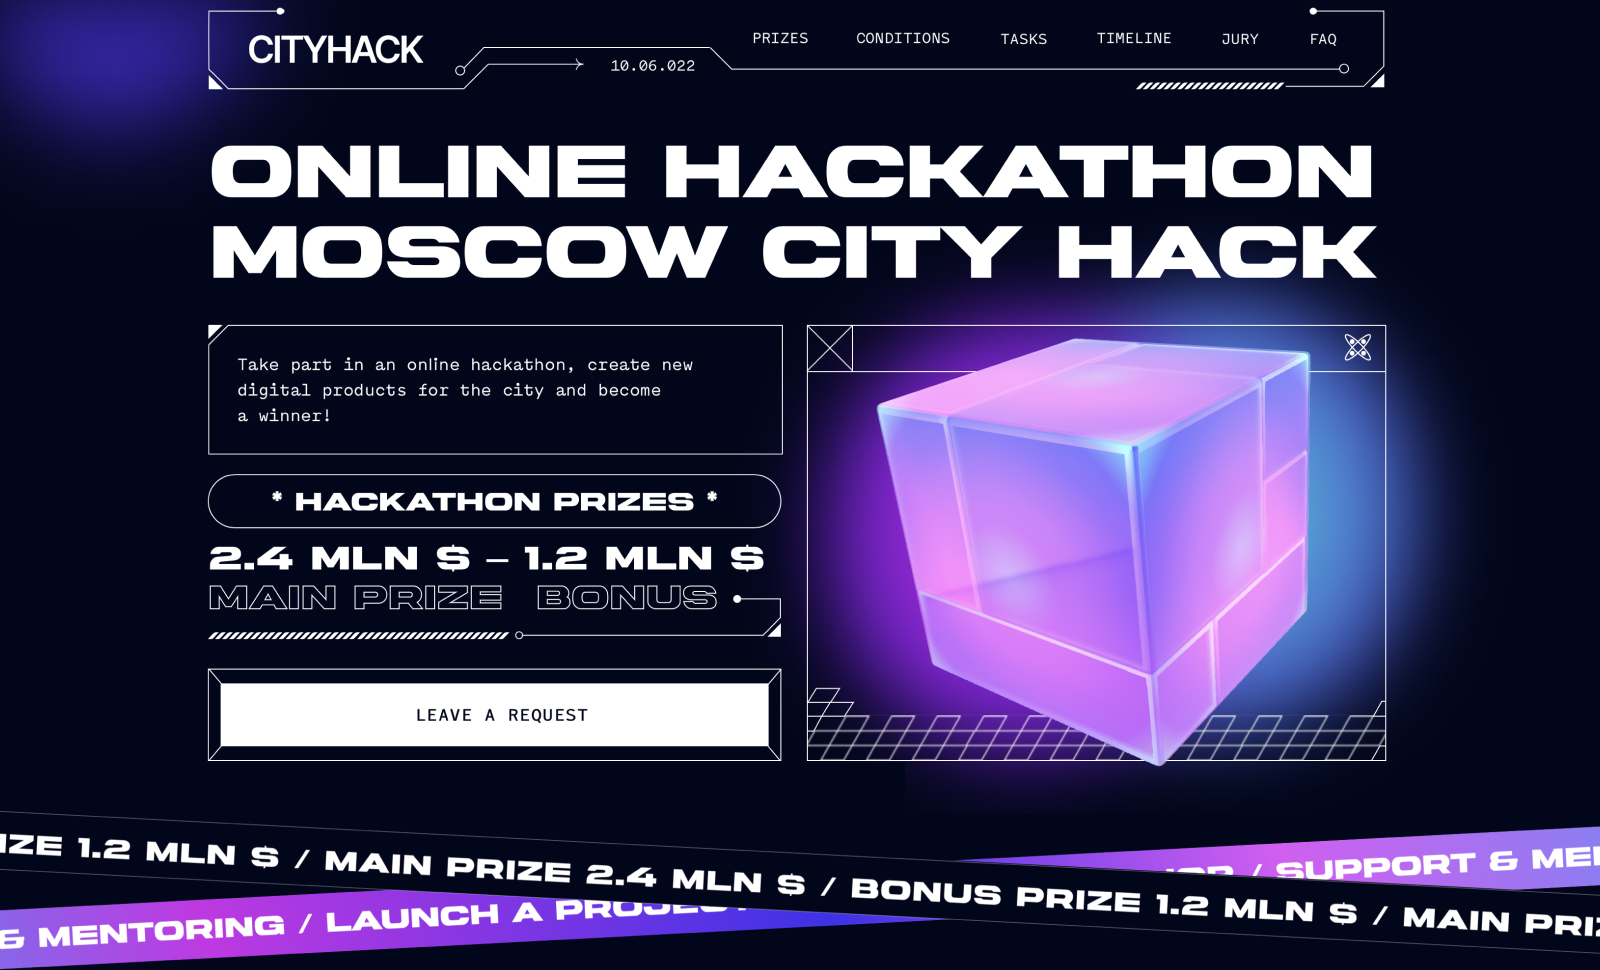 Online hackathon Moscow City Hack